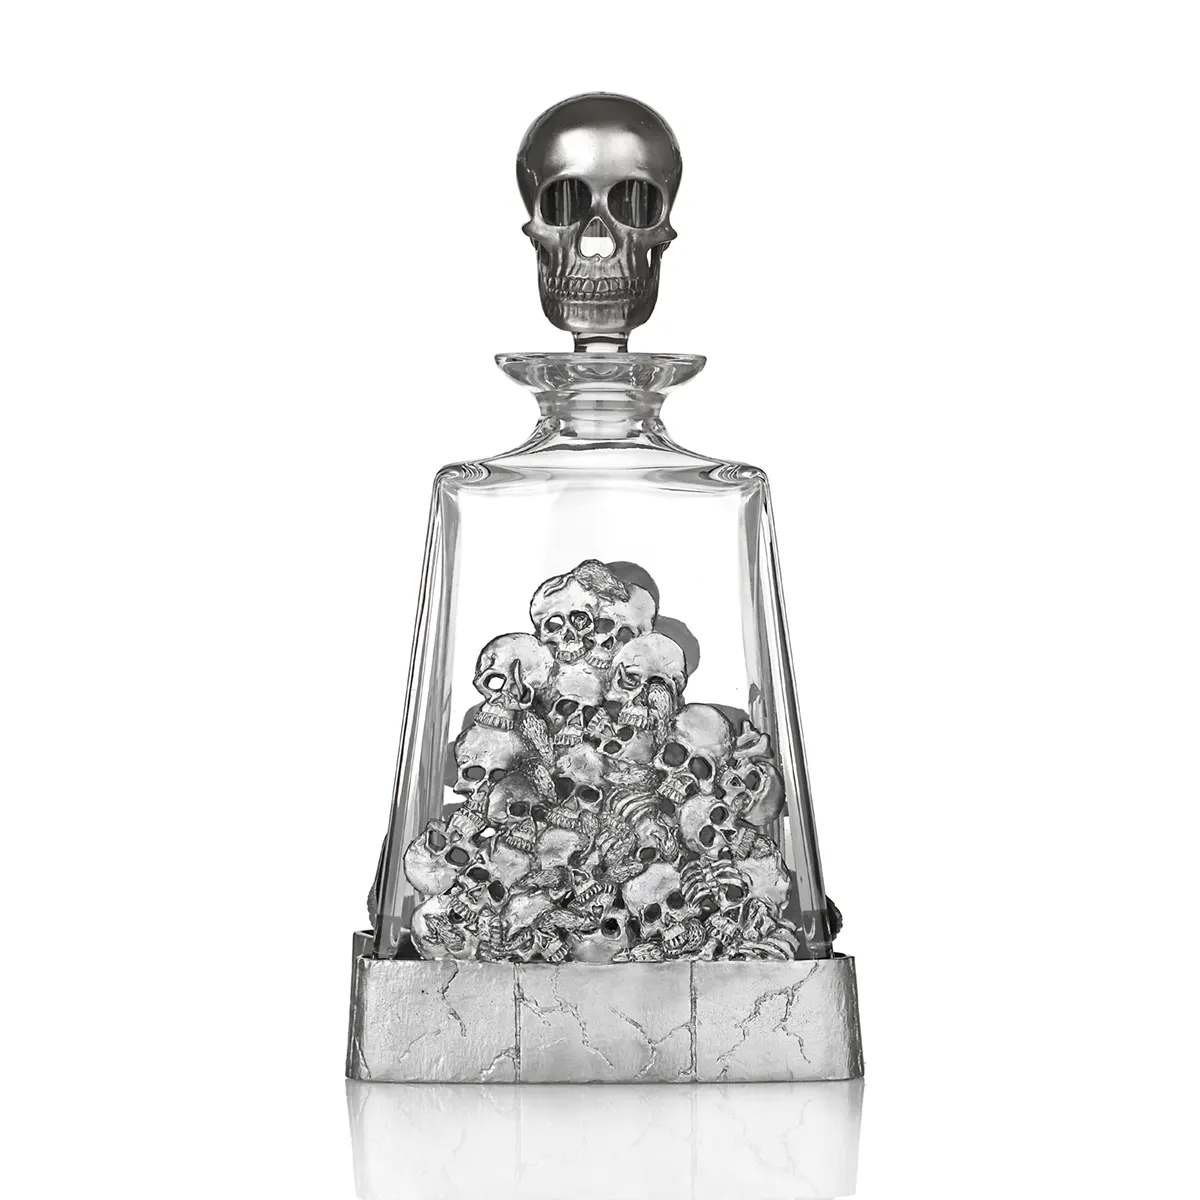 Skull Decanter - Handgefertigte Totenkopf Whisky Karaffe aus England